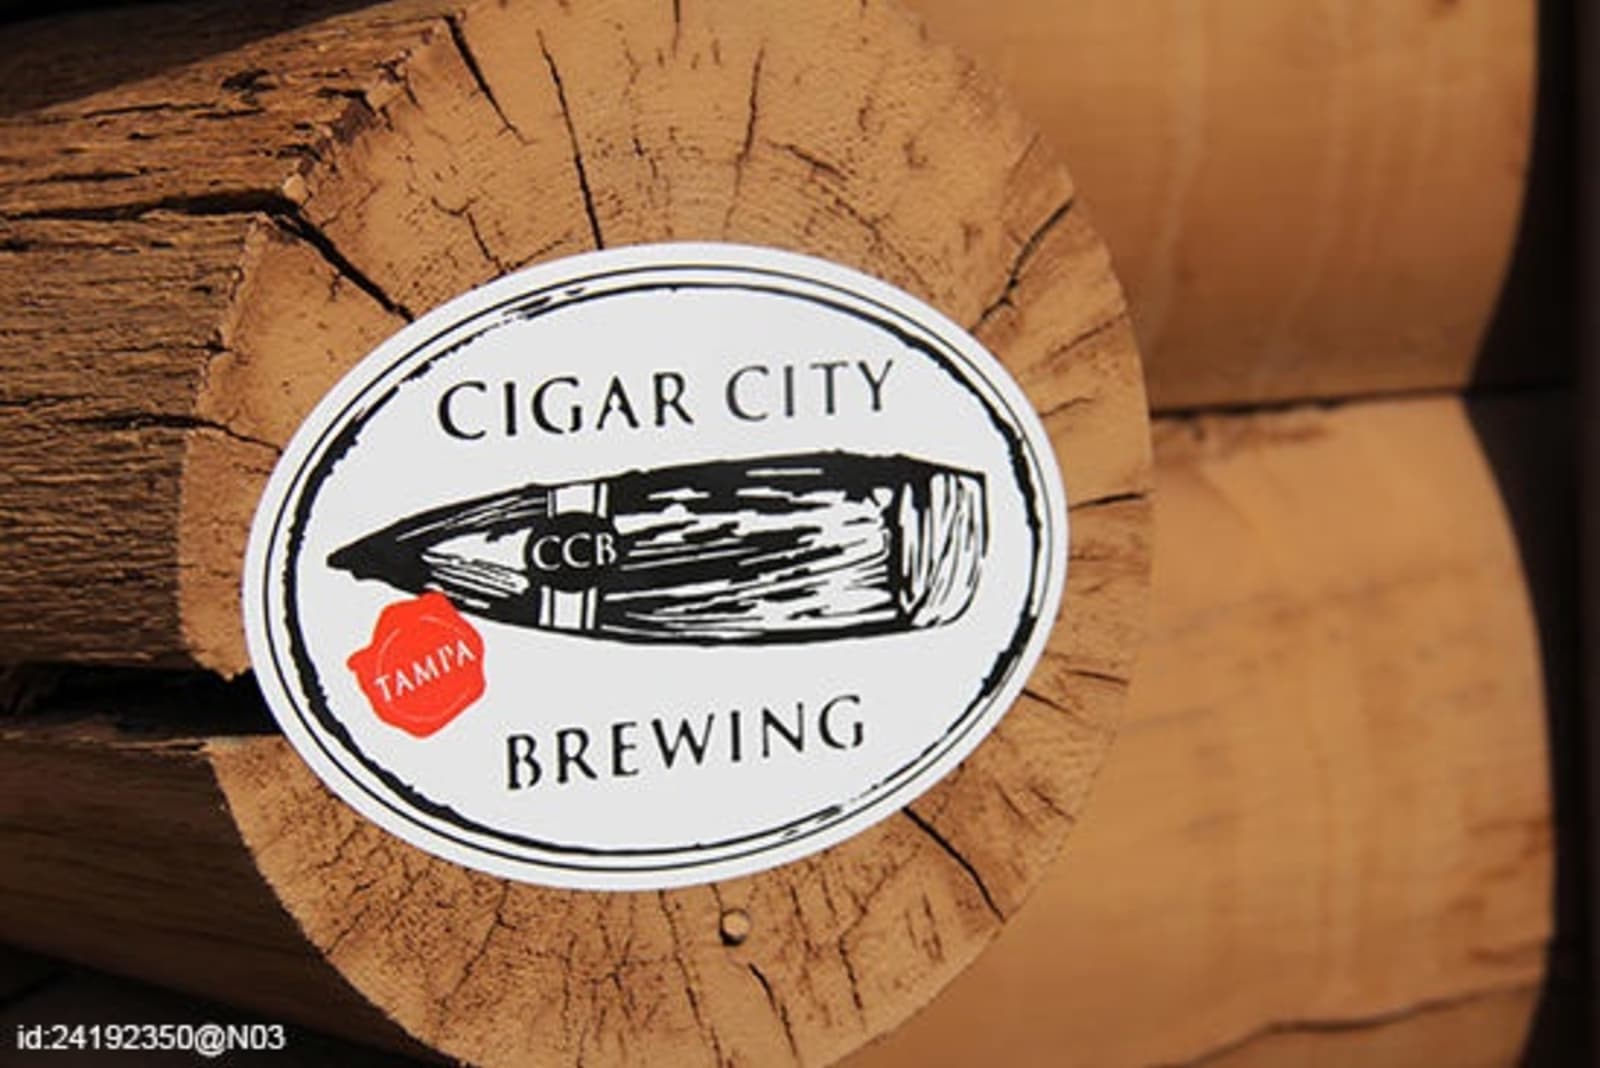 RS-Cigar-City-Brewing-John-Fischer-FLICKR-id-24192350@N03.jpg